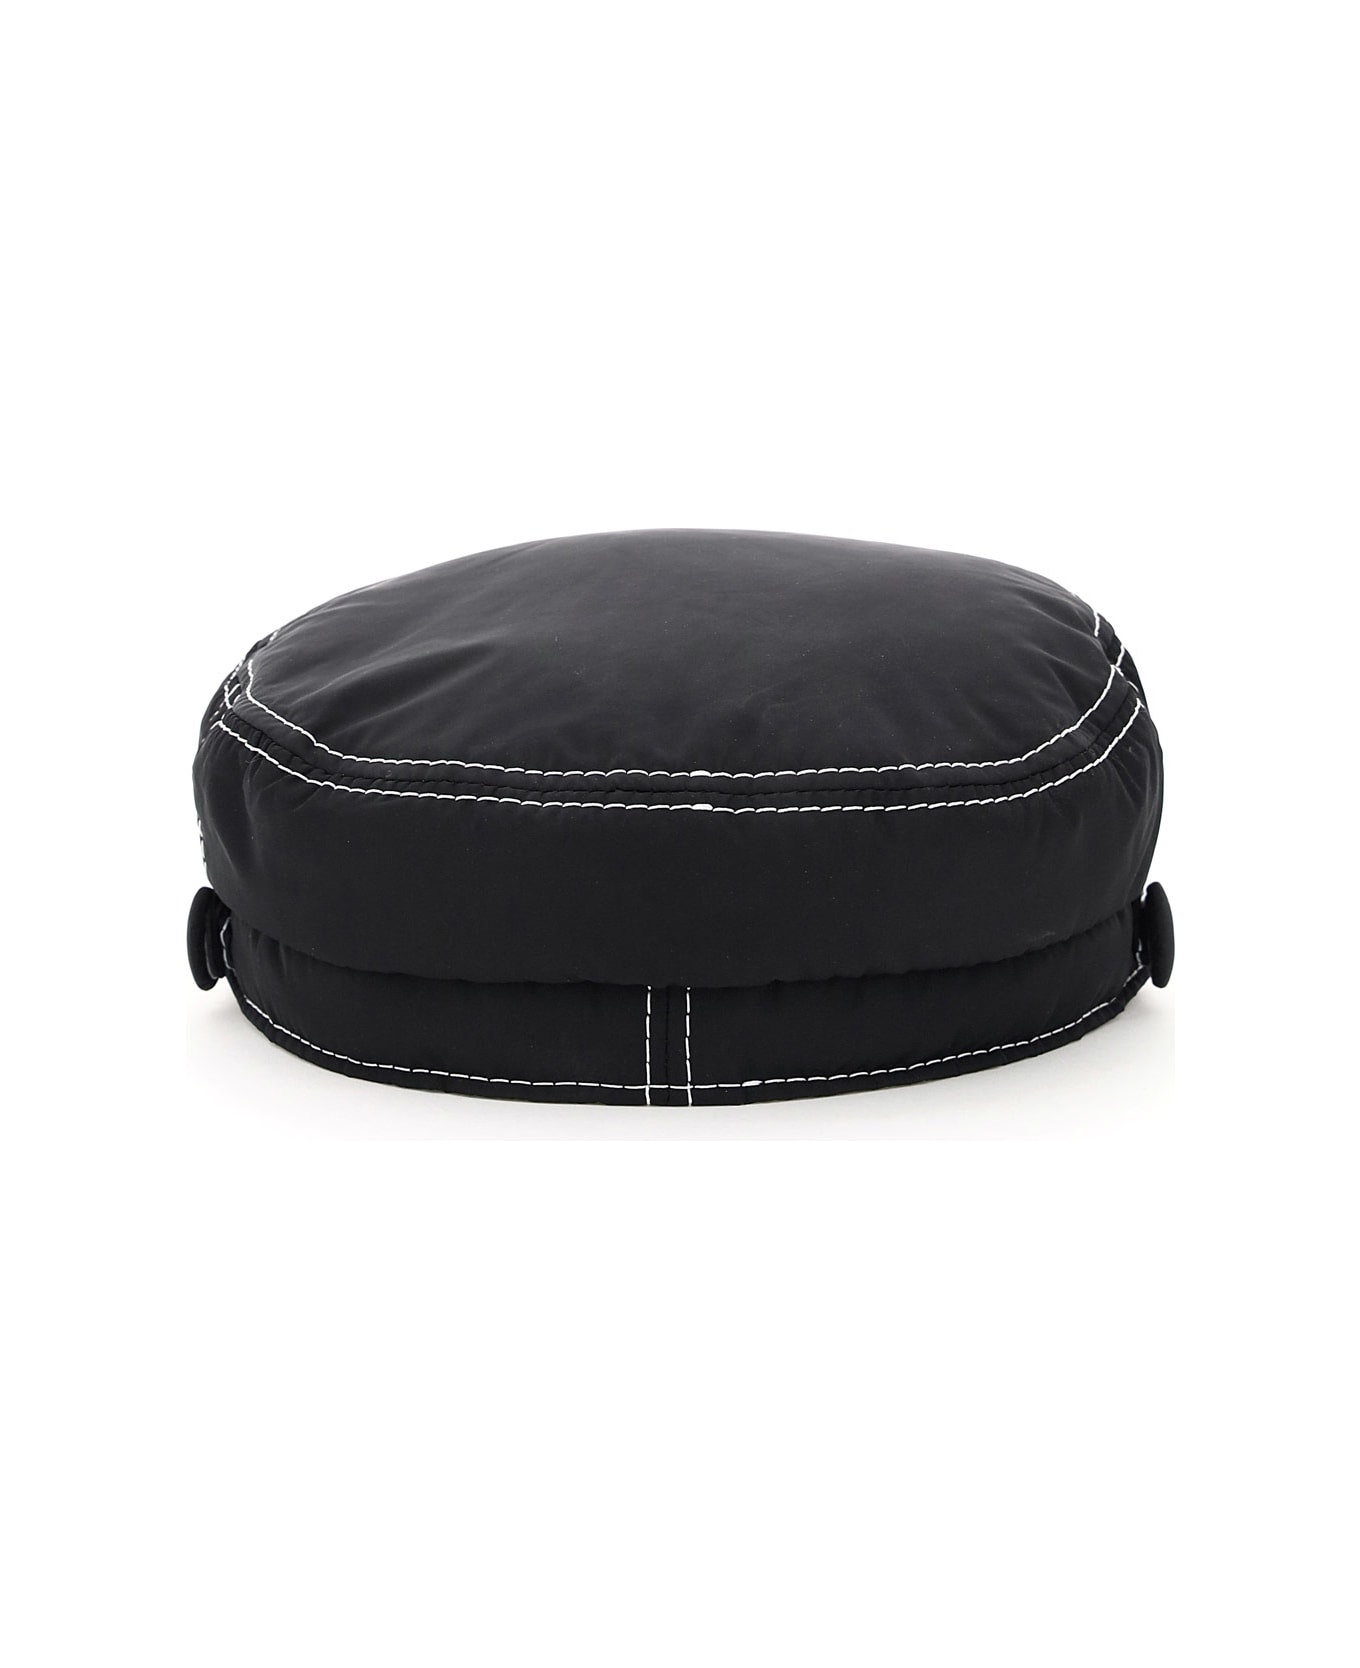 Maison Michel New Abby Nylon Sailor Cap - BLACK 帽子